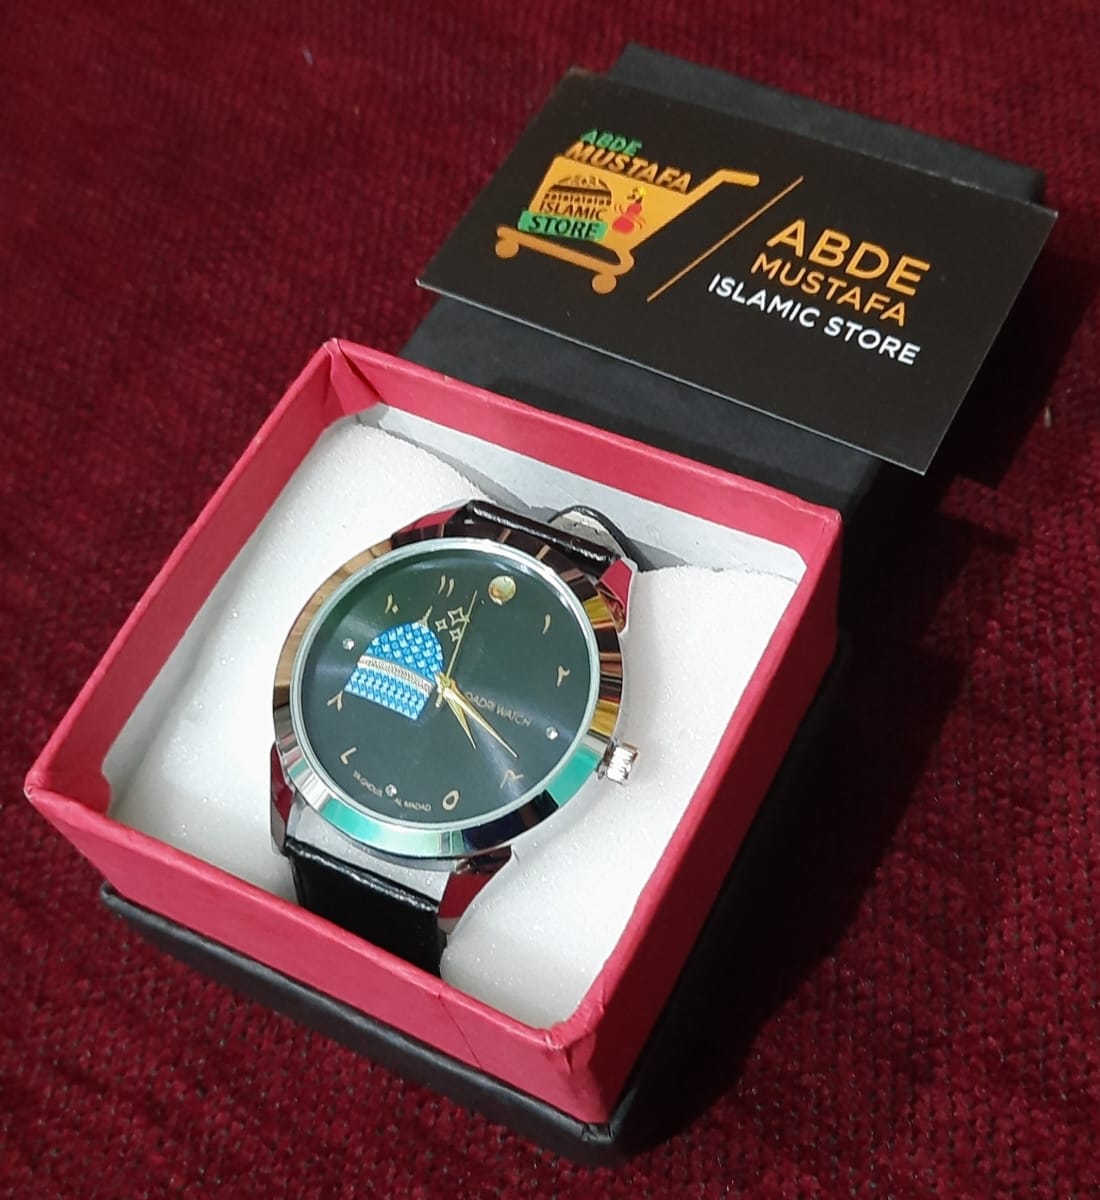 Gumbad E Gaus e Azam Watch Exclusive Design By Abde Mustafa Store (Model No.1104)